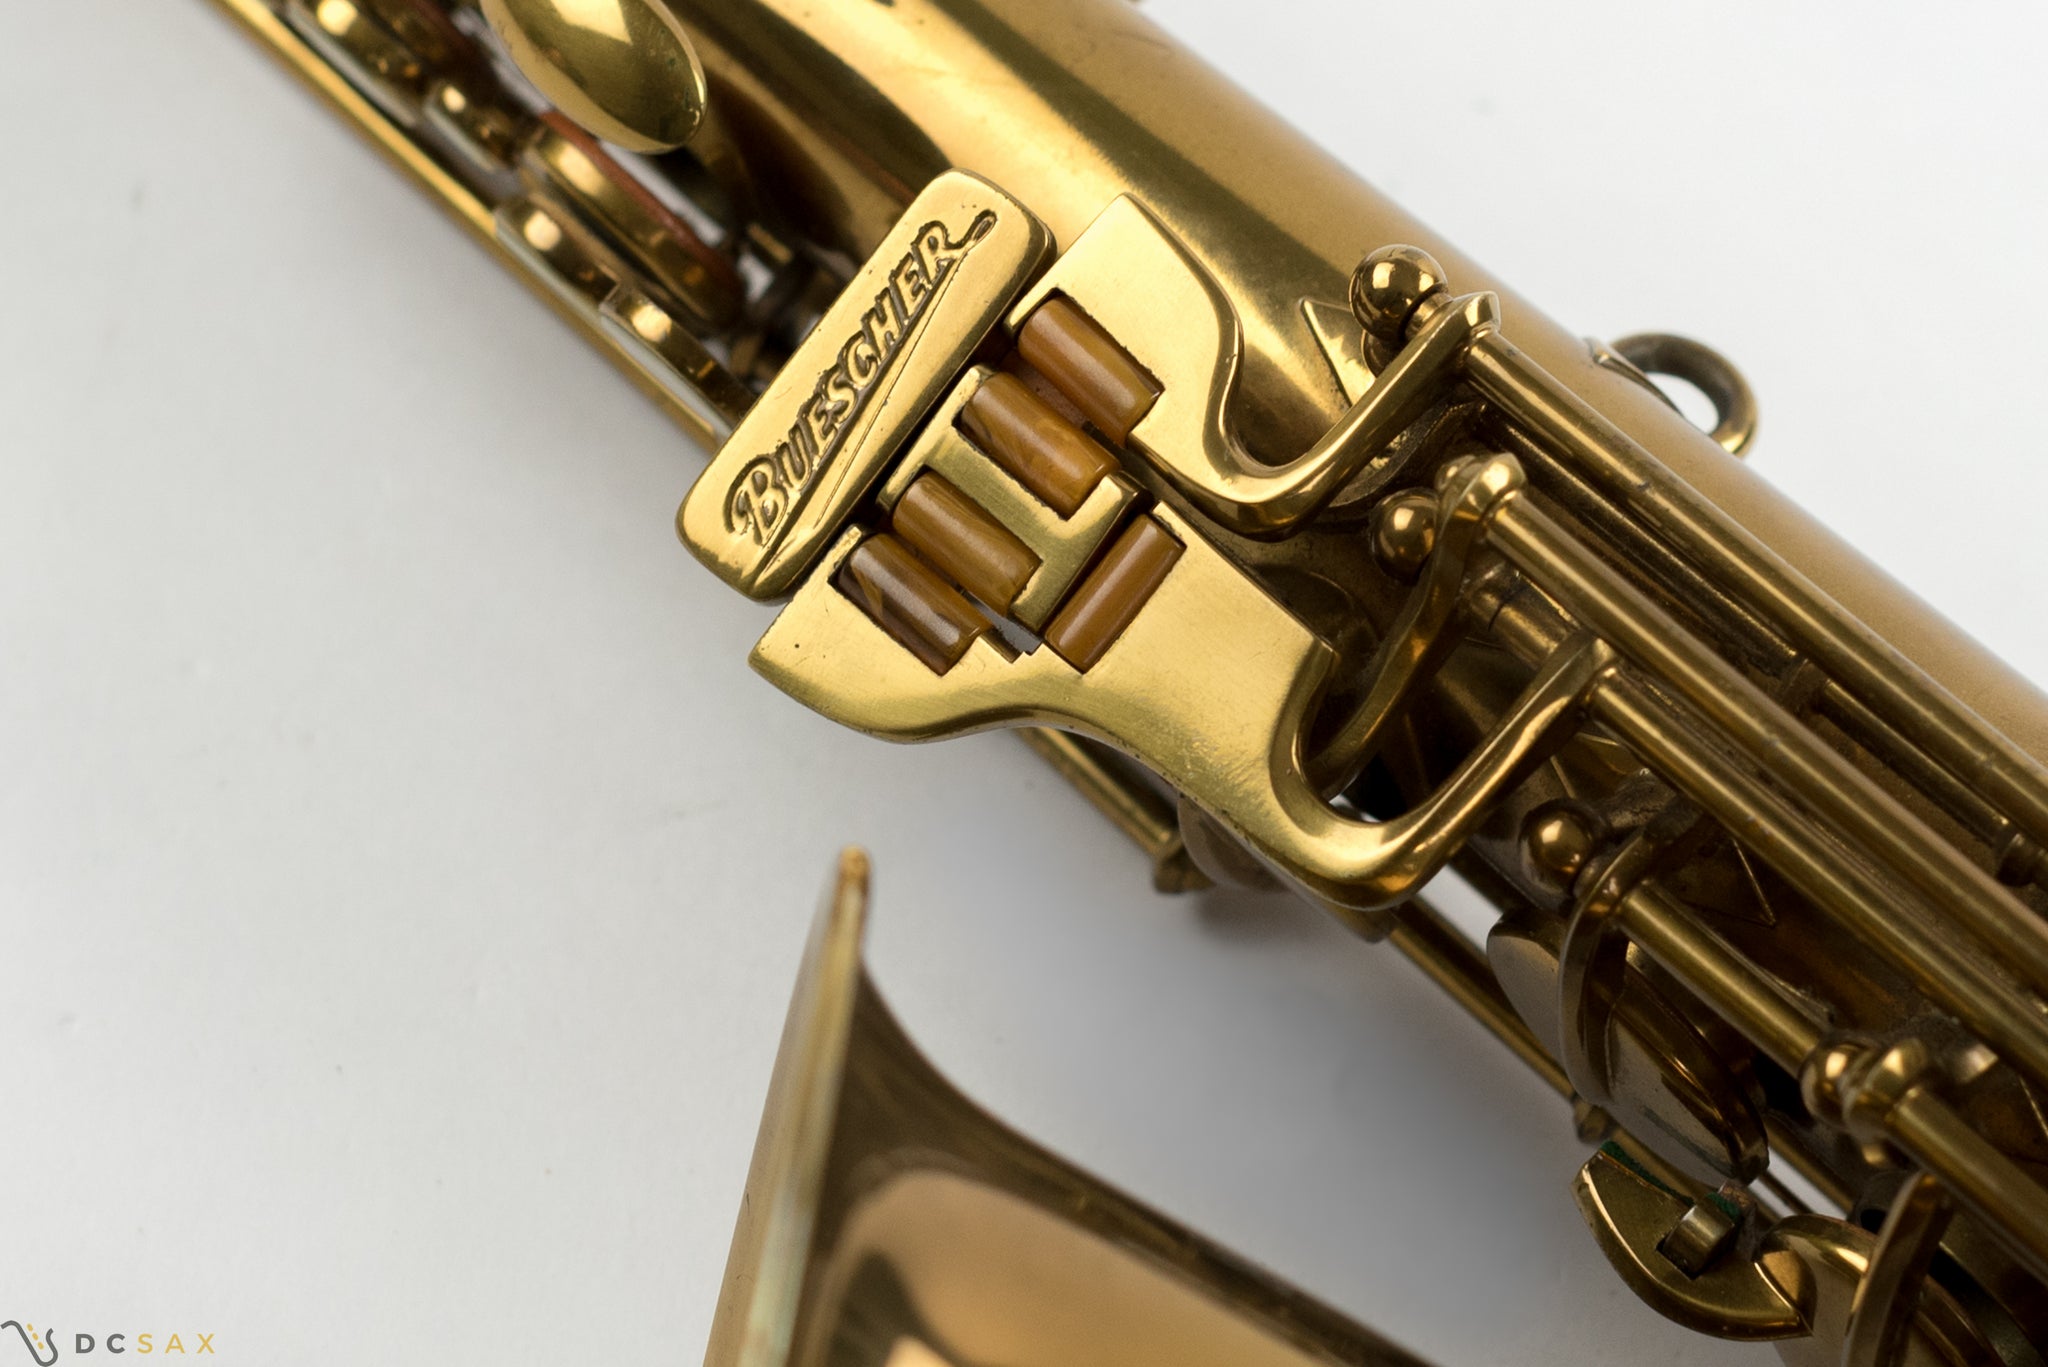 1937 Buescher Aristocrat Alto Saxophone